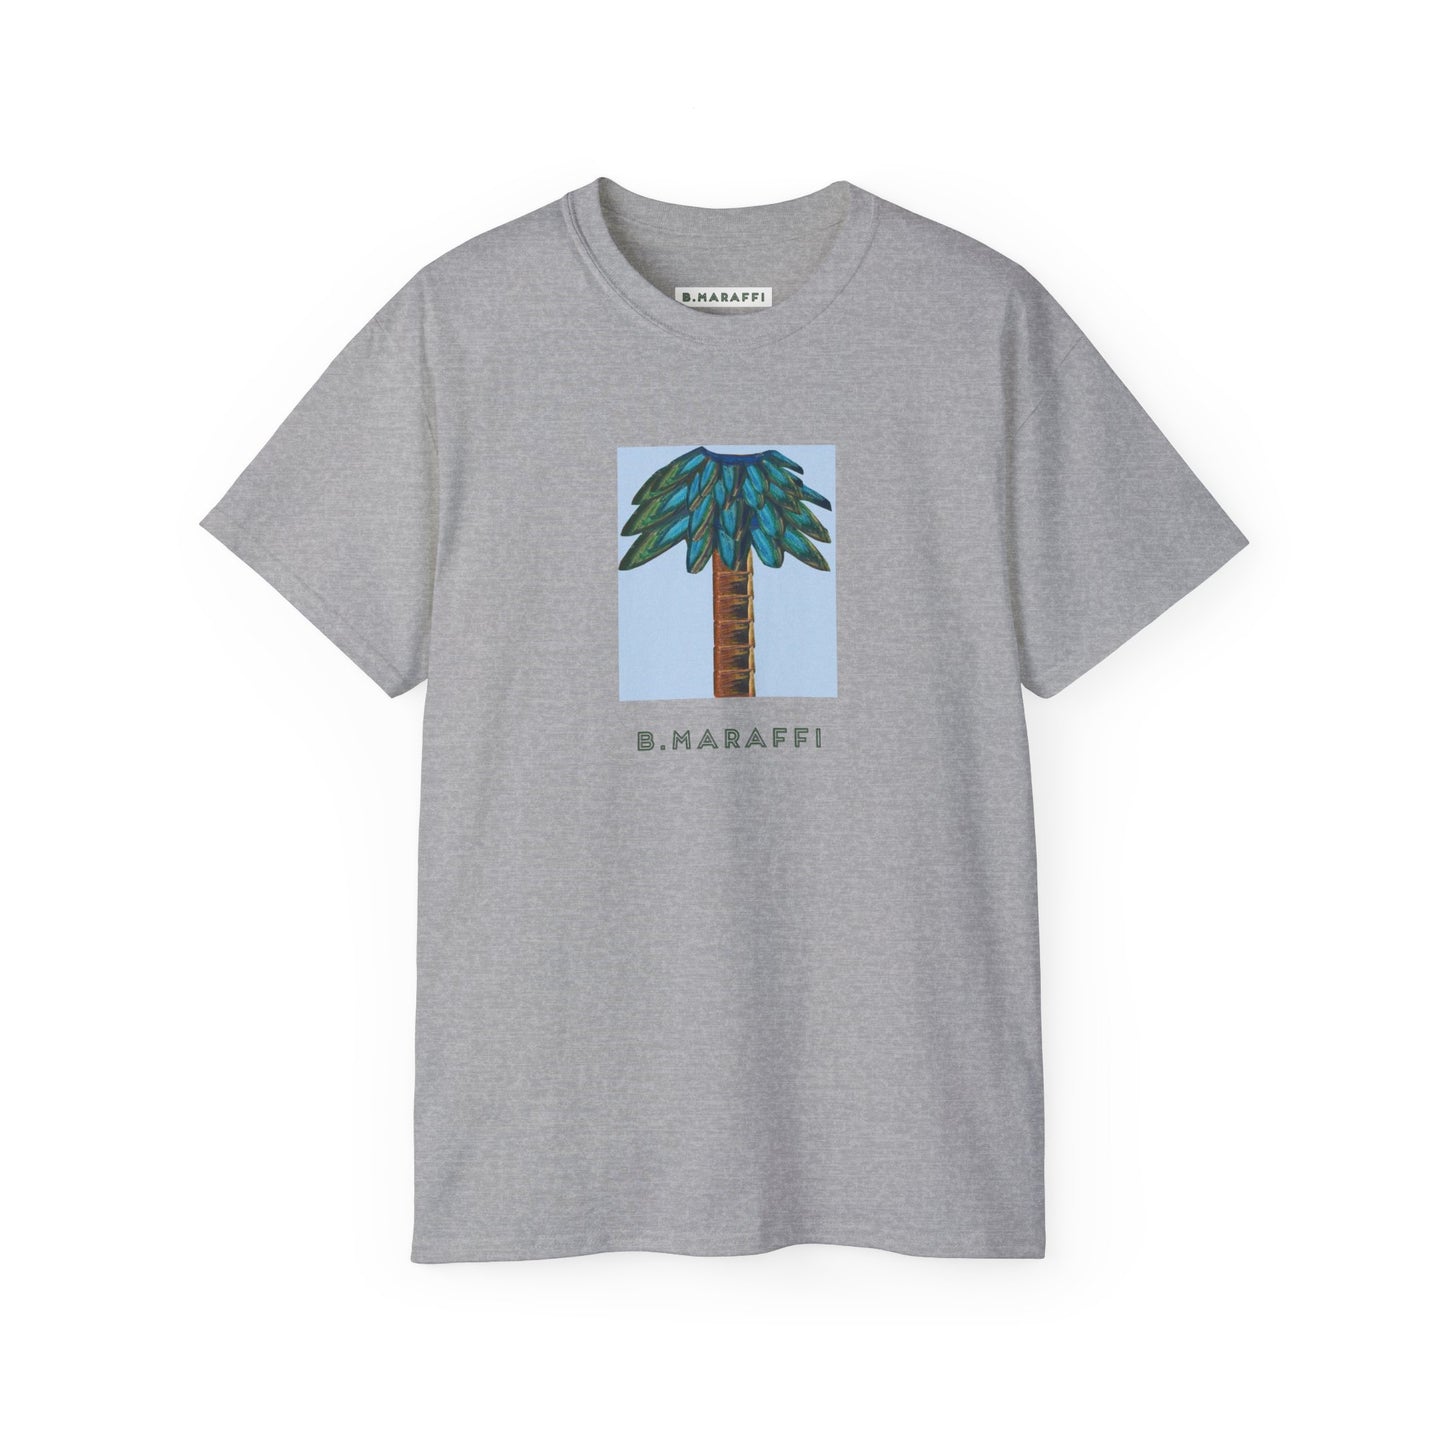 B.Maraffi Cotton T-shirt - Tiki Palm Sky